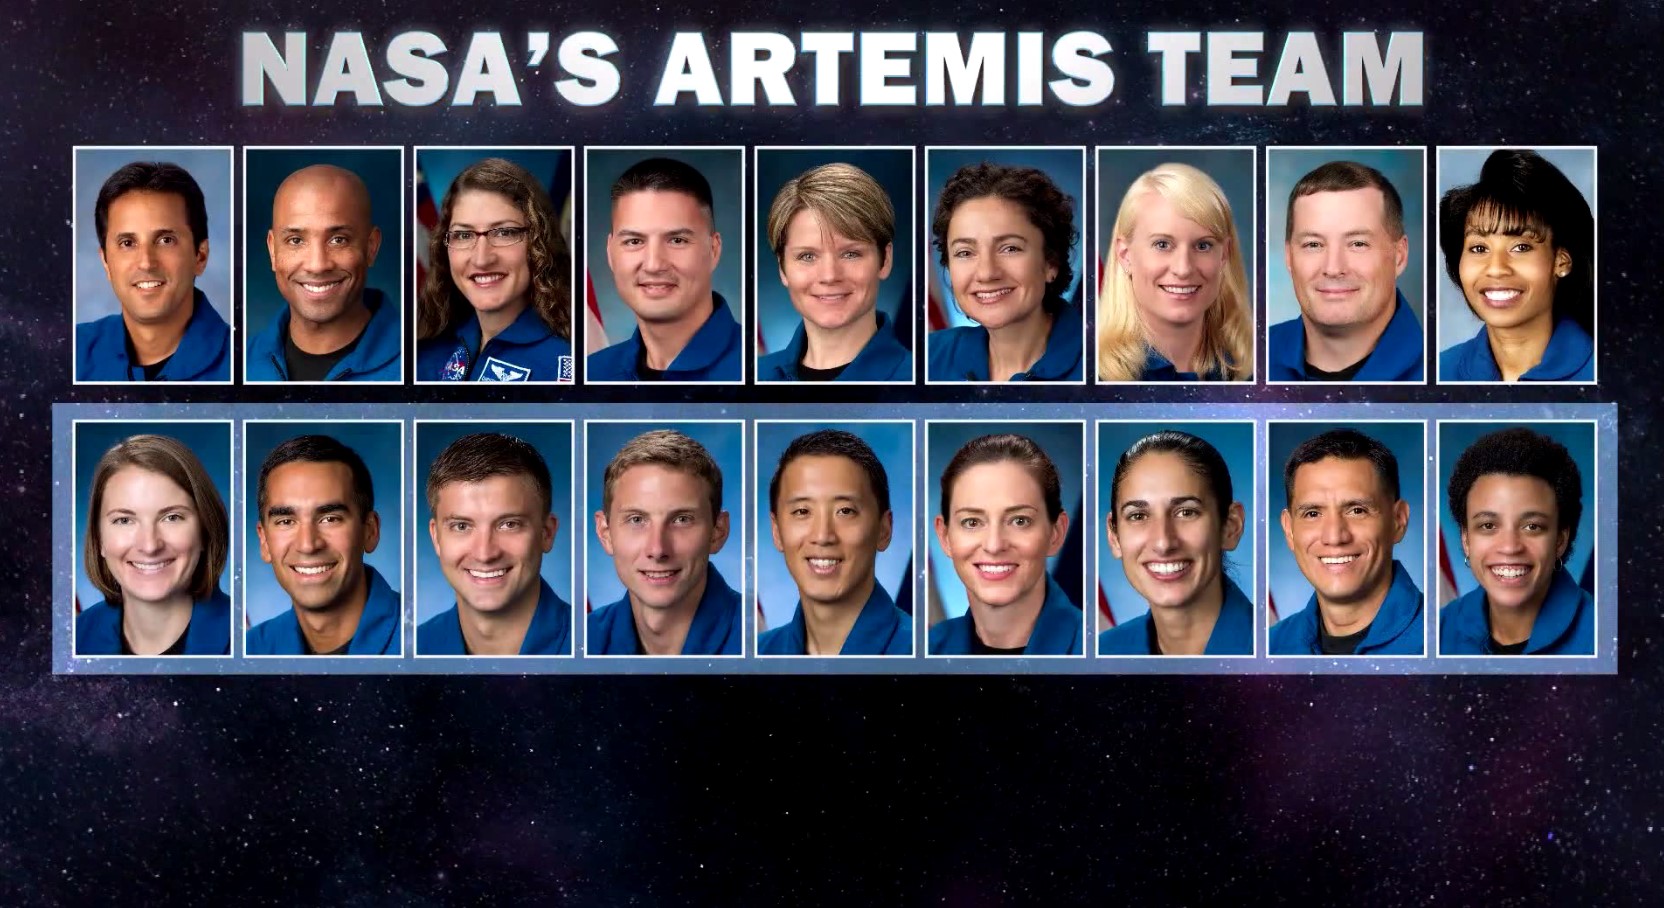 NASA announces 'Artemis Team' of astronauts for future moon missions